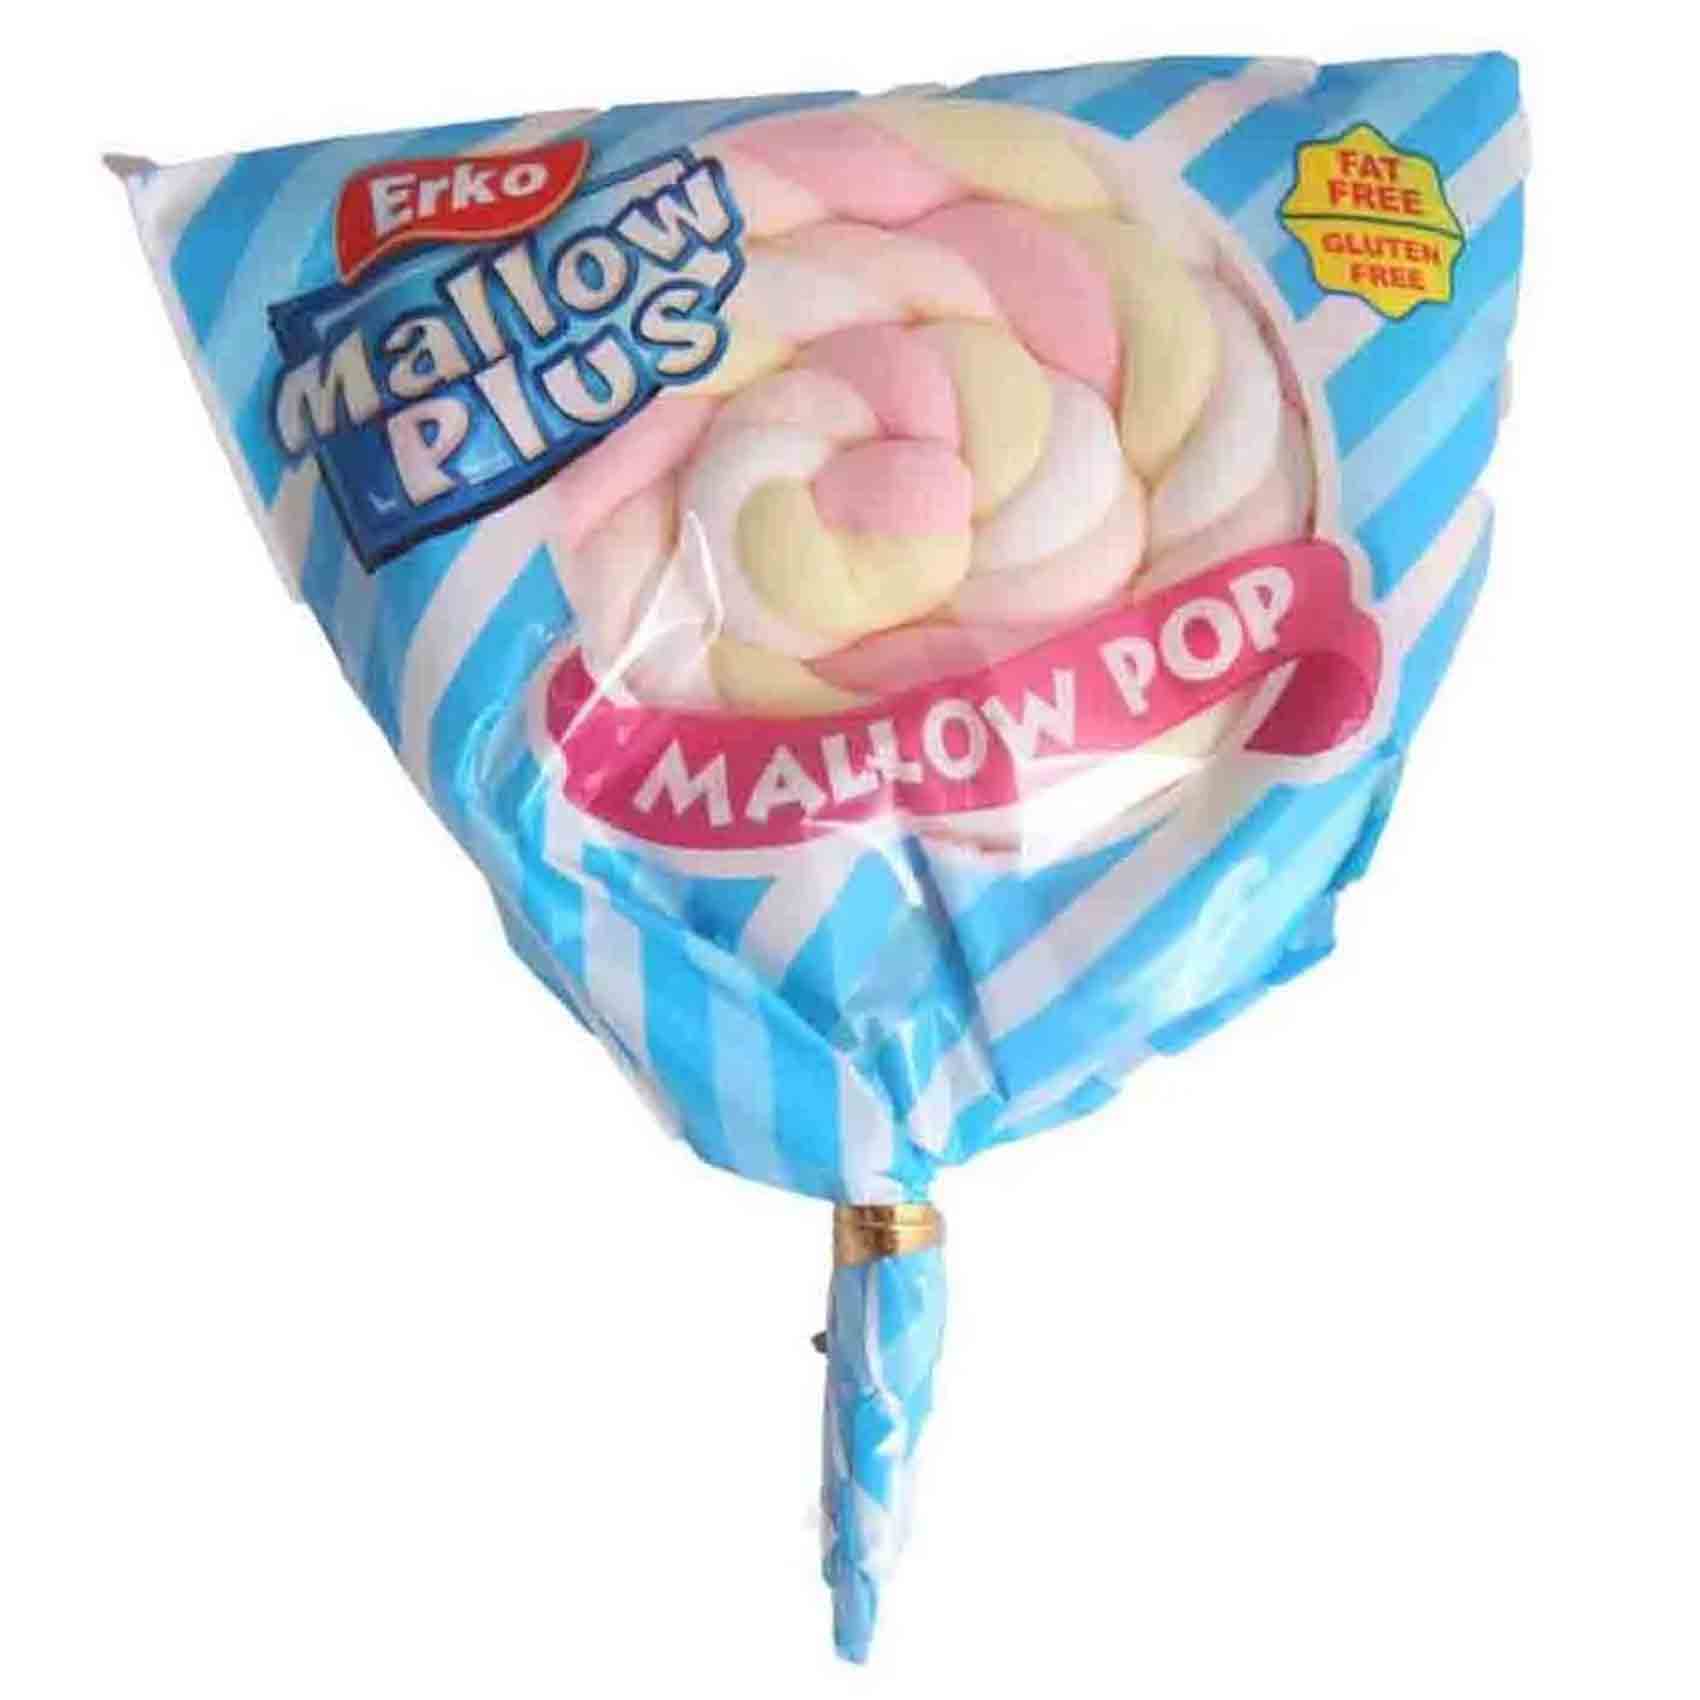 Erko Gluten Free And Fat Free Marshmallow Mallow Pop 40 Gram